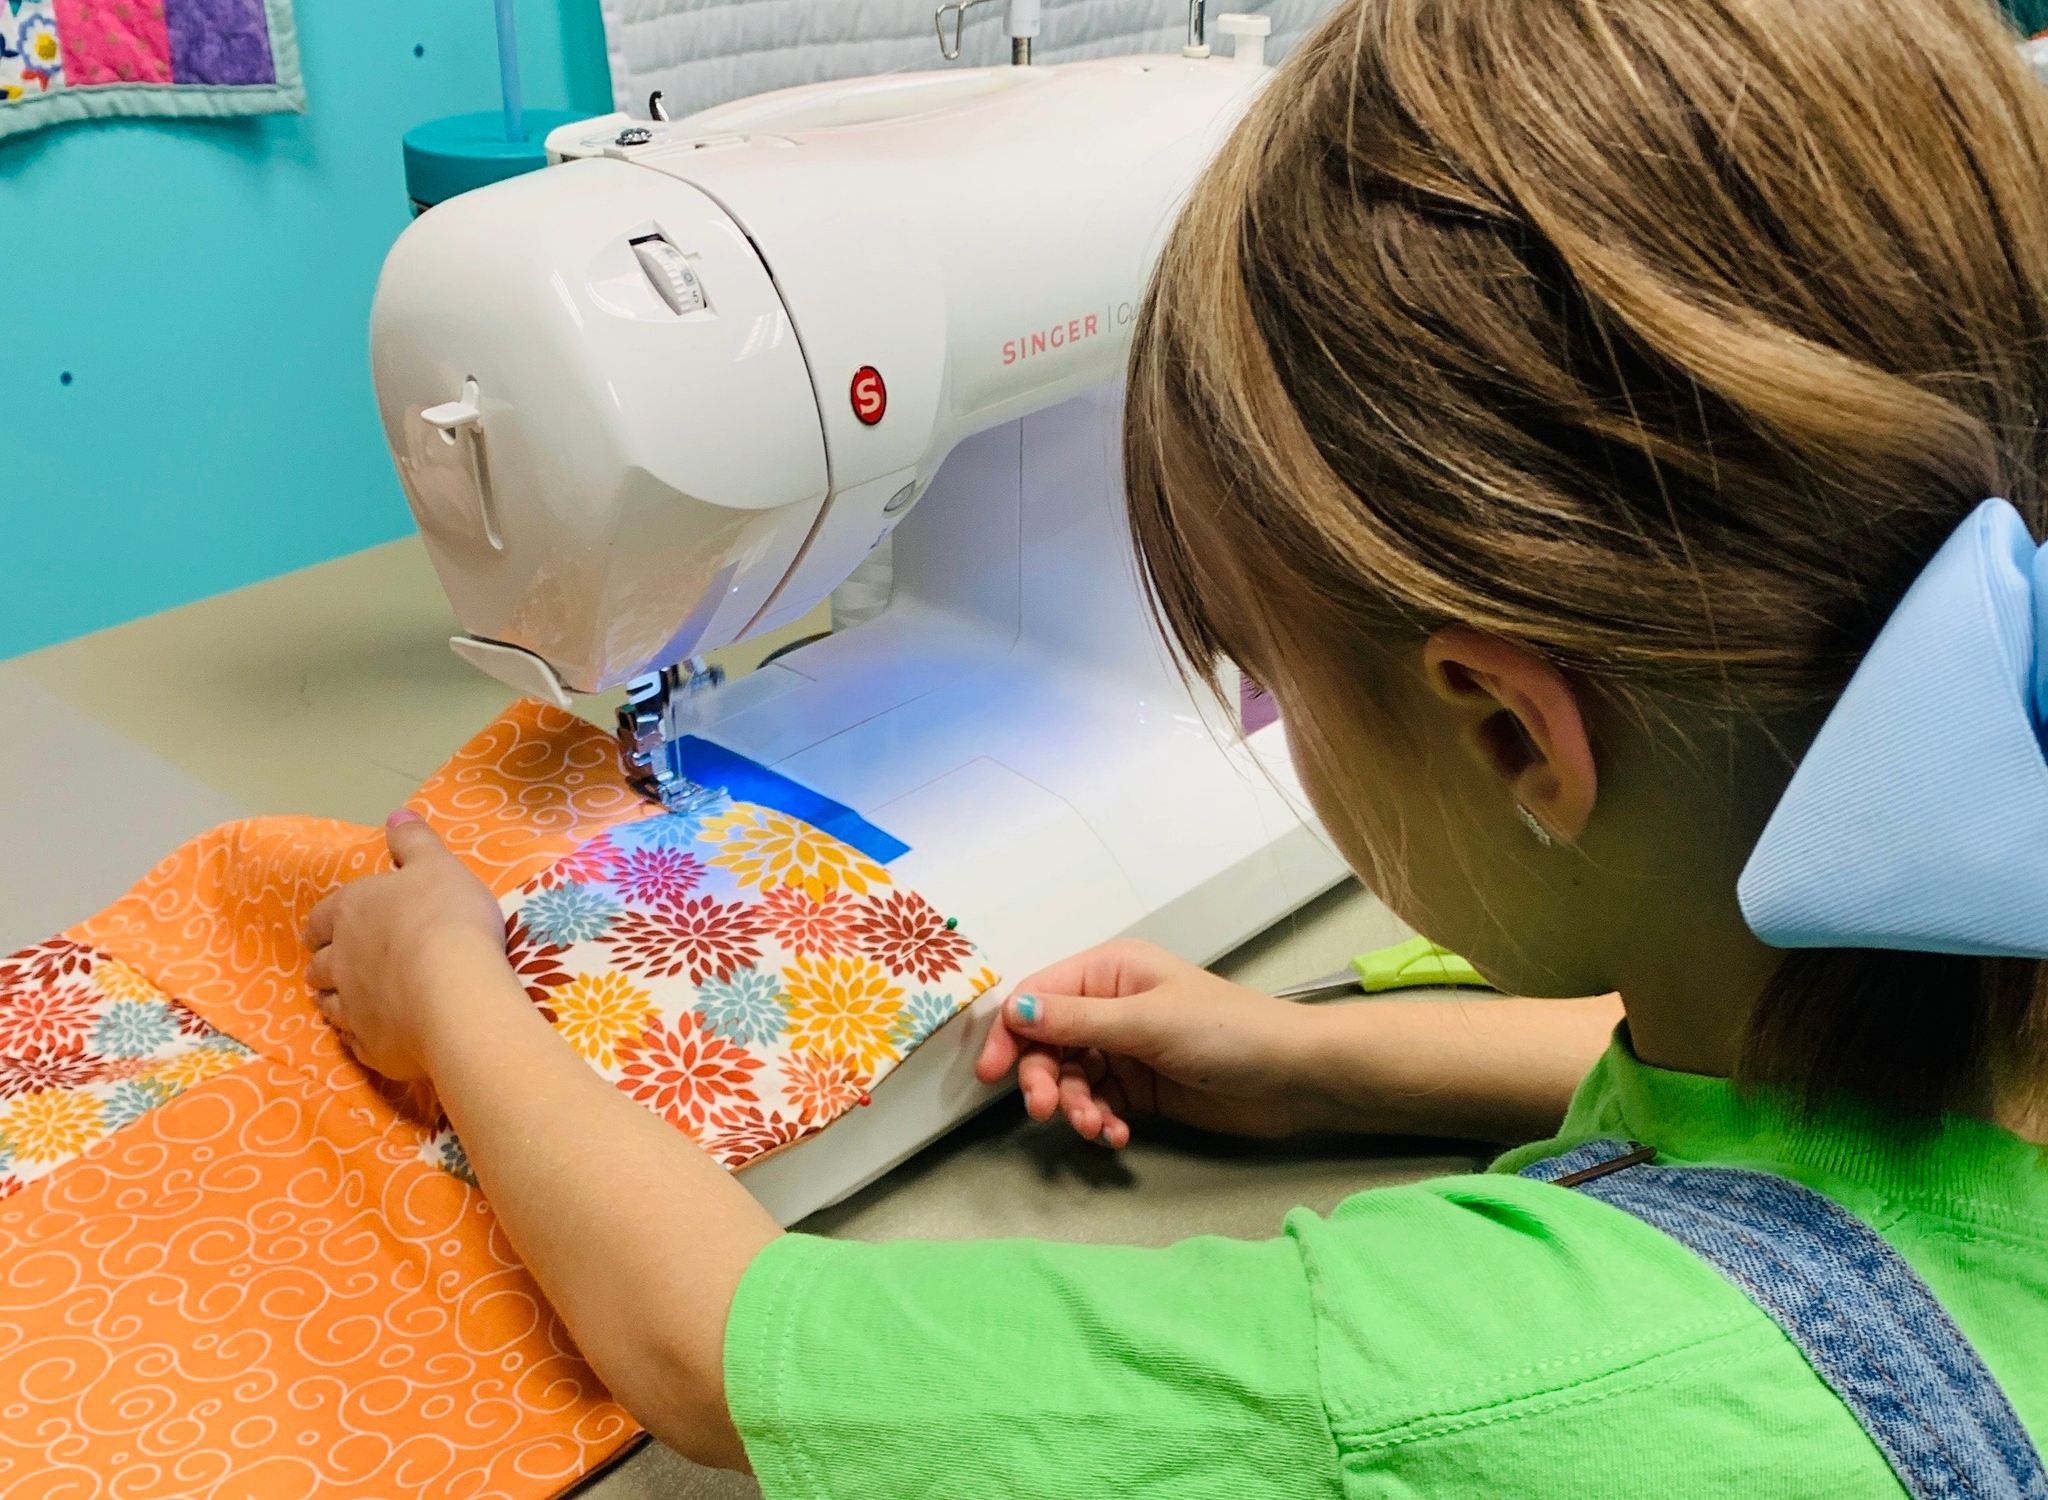 Girl sewing at sewing machine.